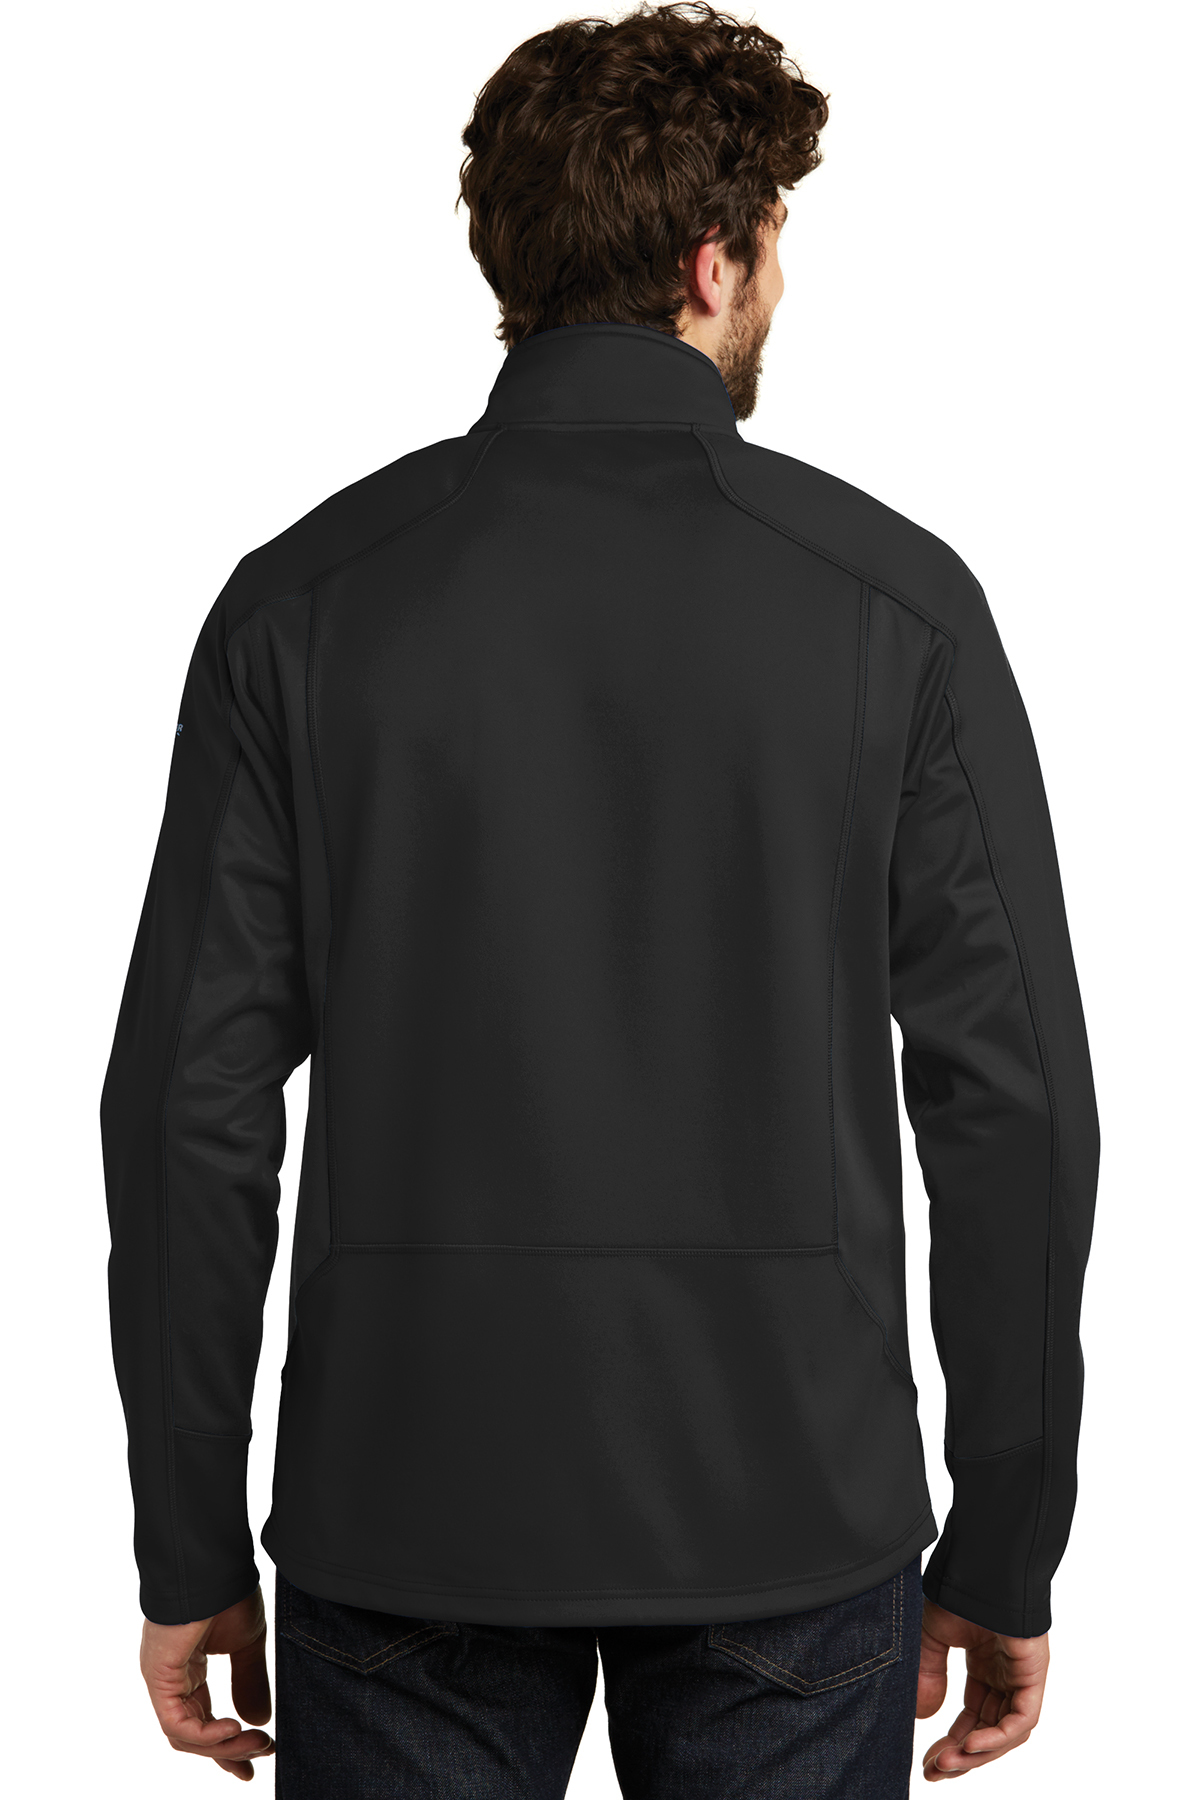 Eddie Bauer Trail Soft Shell Jacket | Product | SanMar